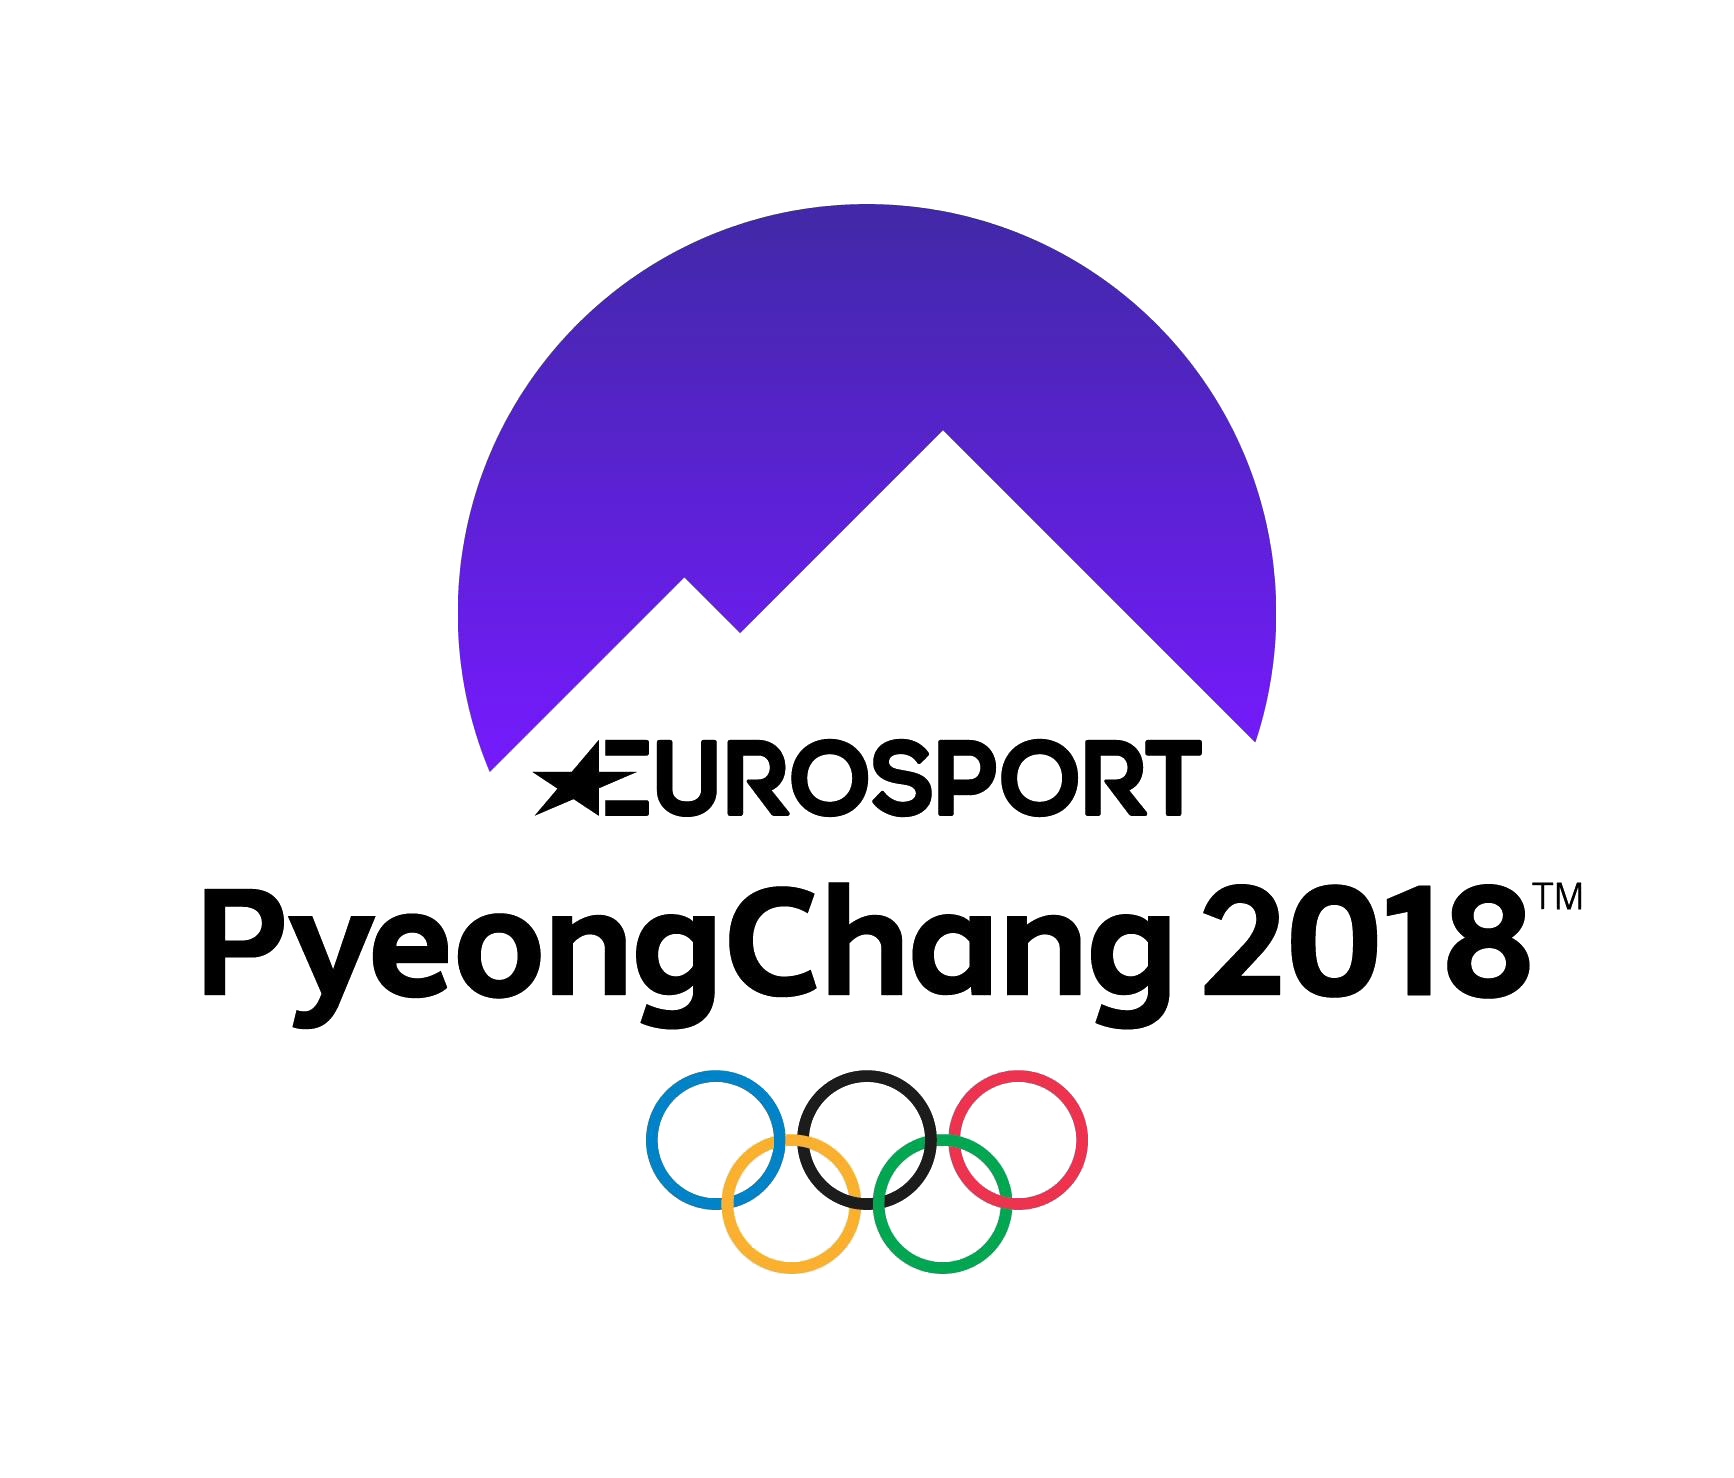 Peeongchang 2018 Olympics Logo PNG Image